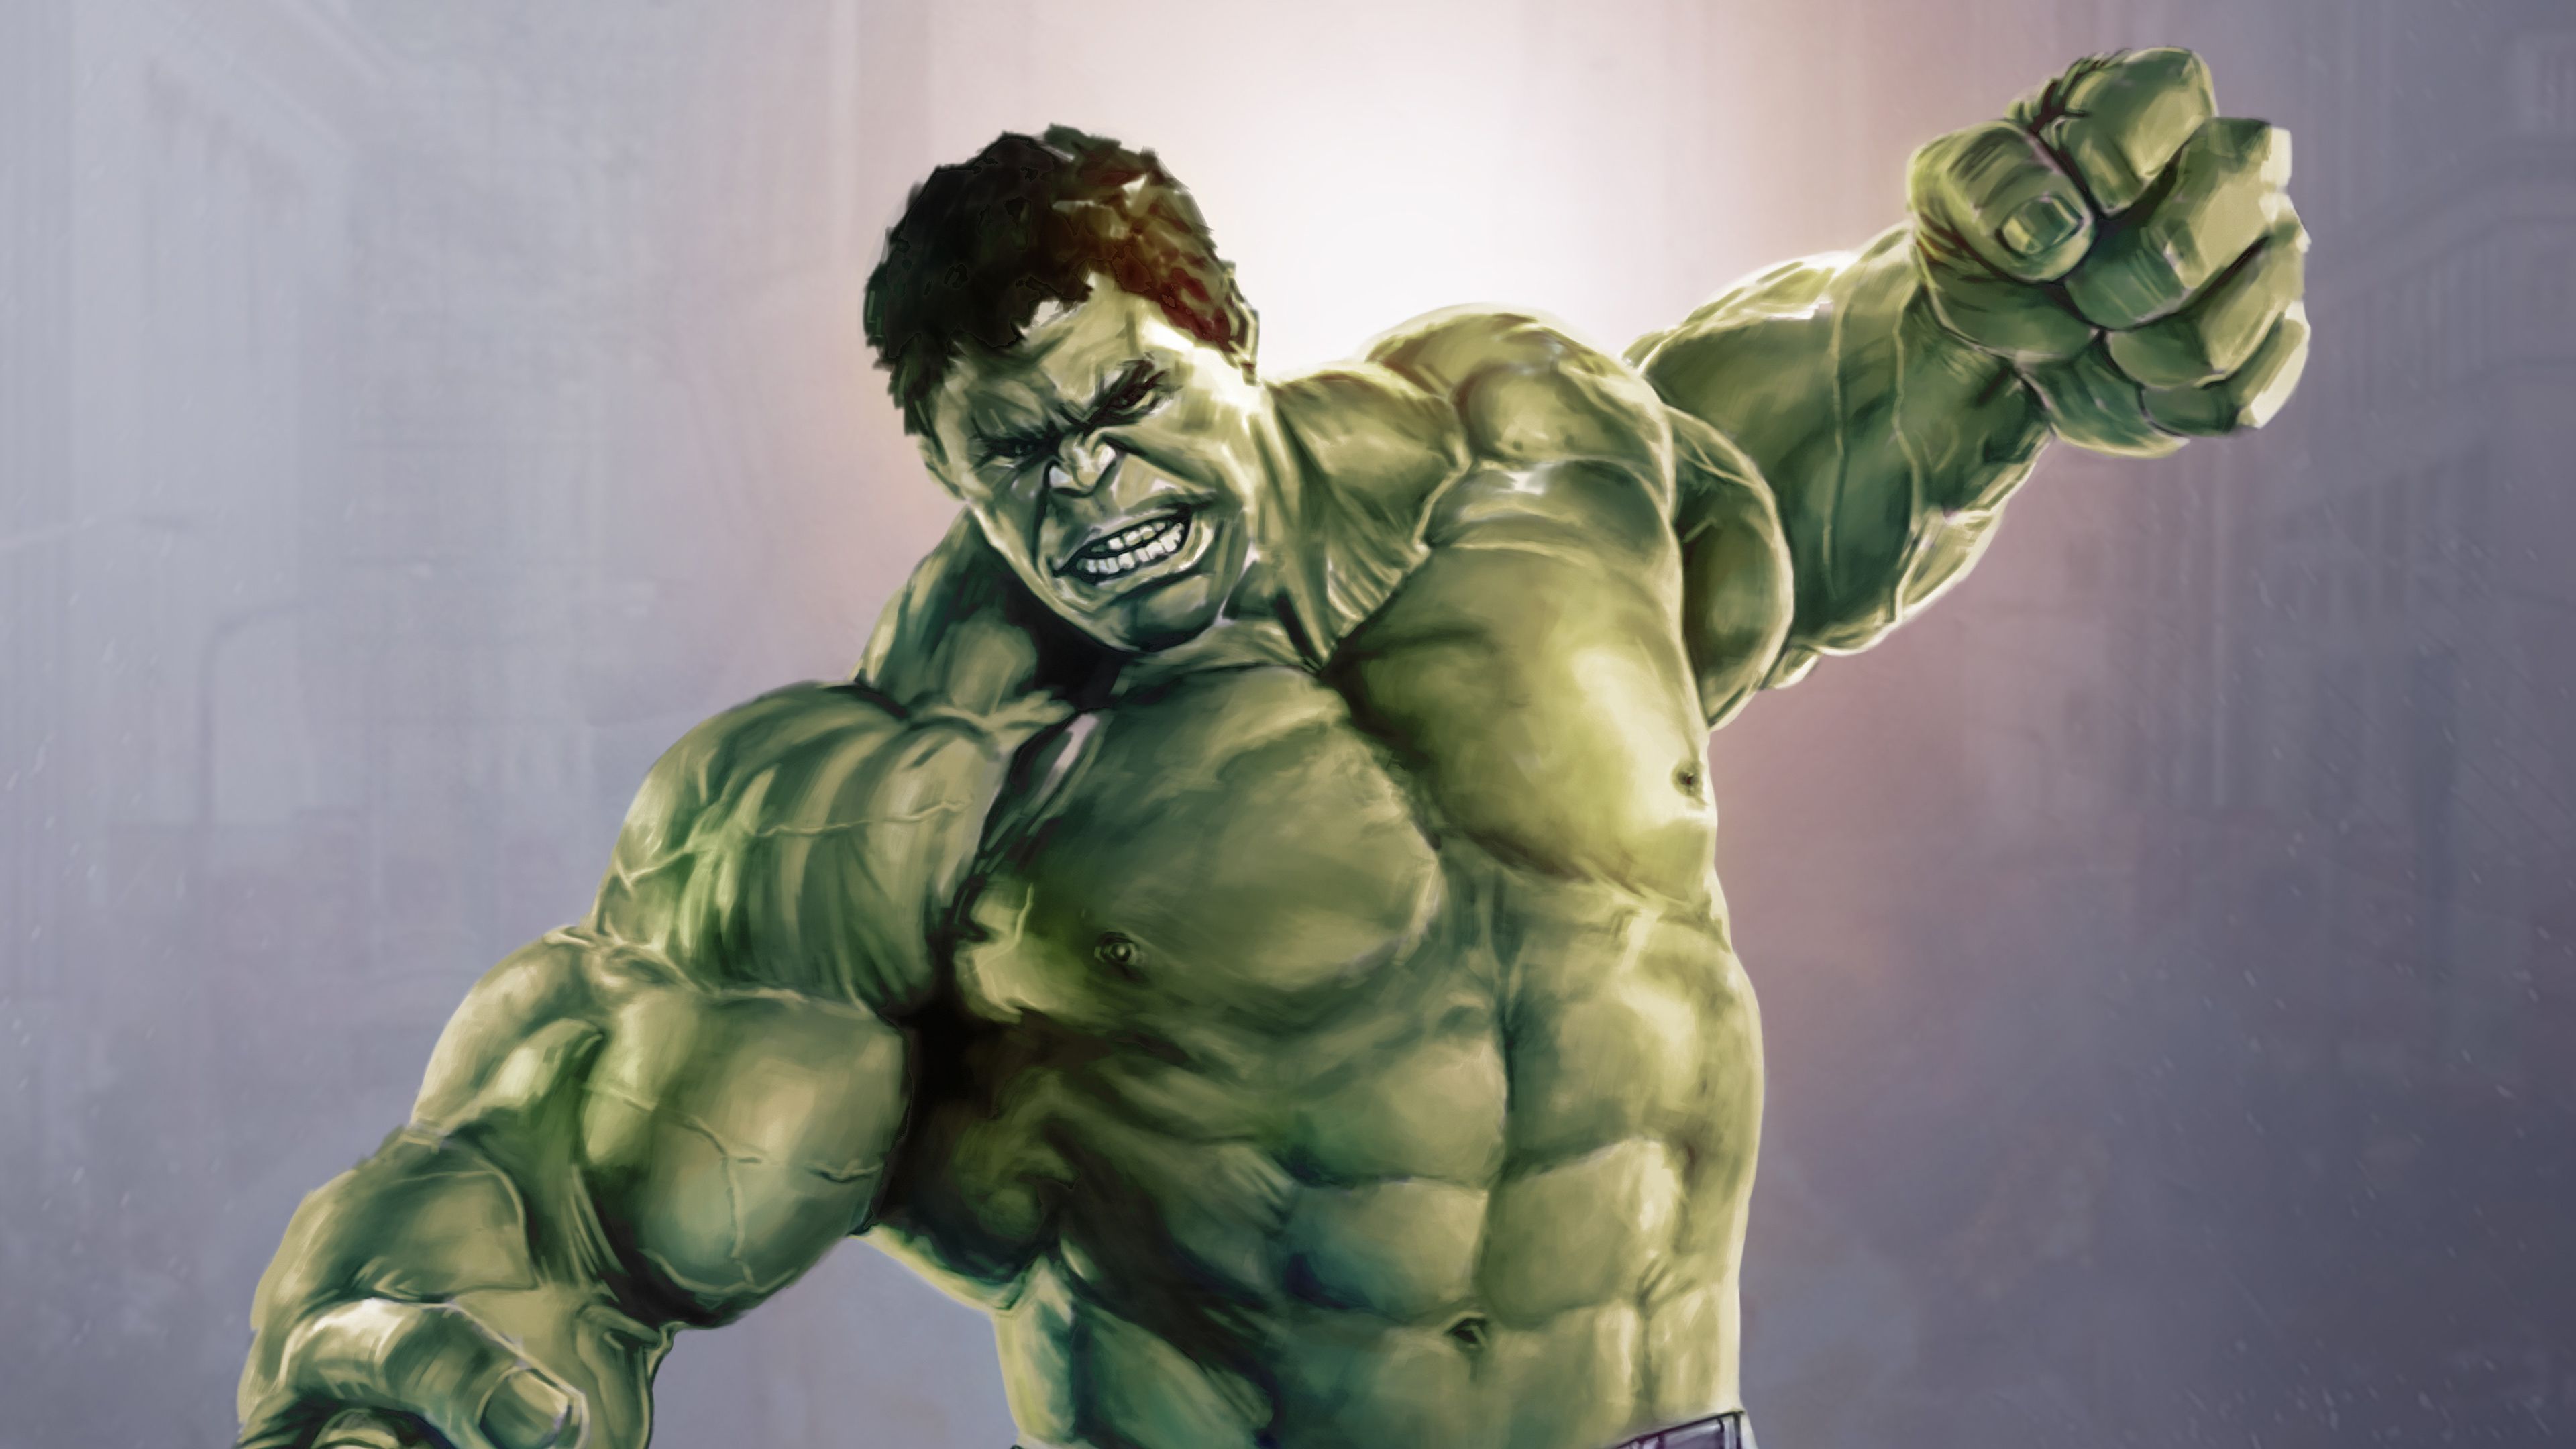 Cool Hulk Wallpapers